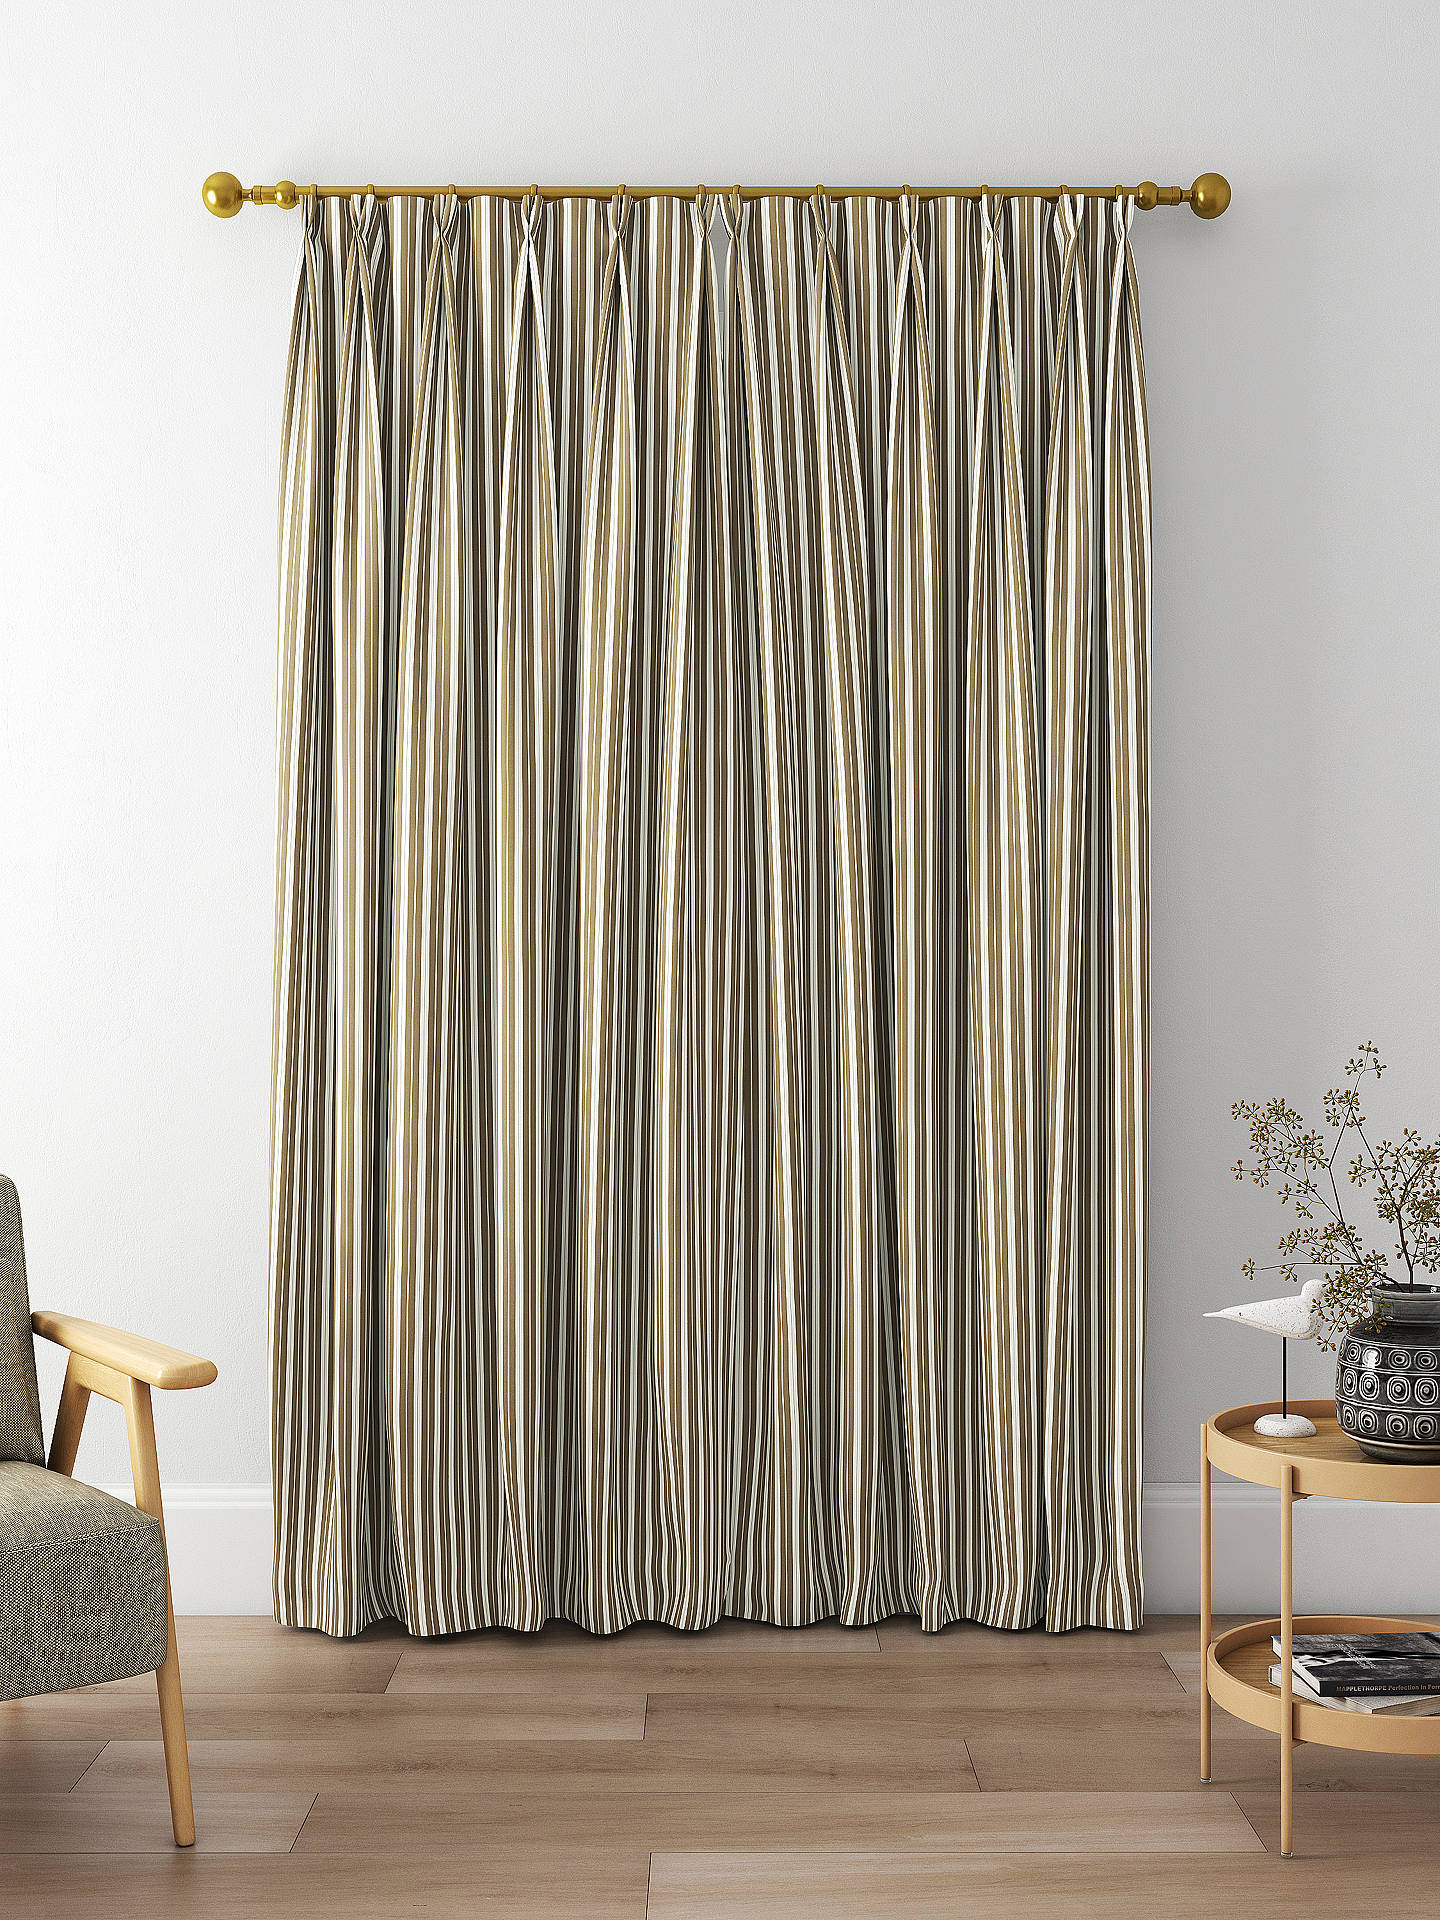 Clarke & Clarke Belgravia Made to Measure Curtains, Charcoal/Linen